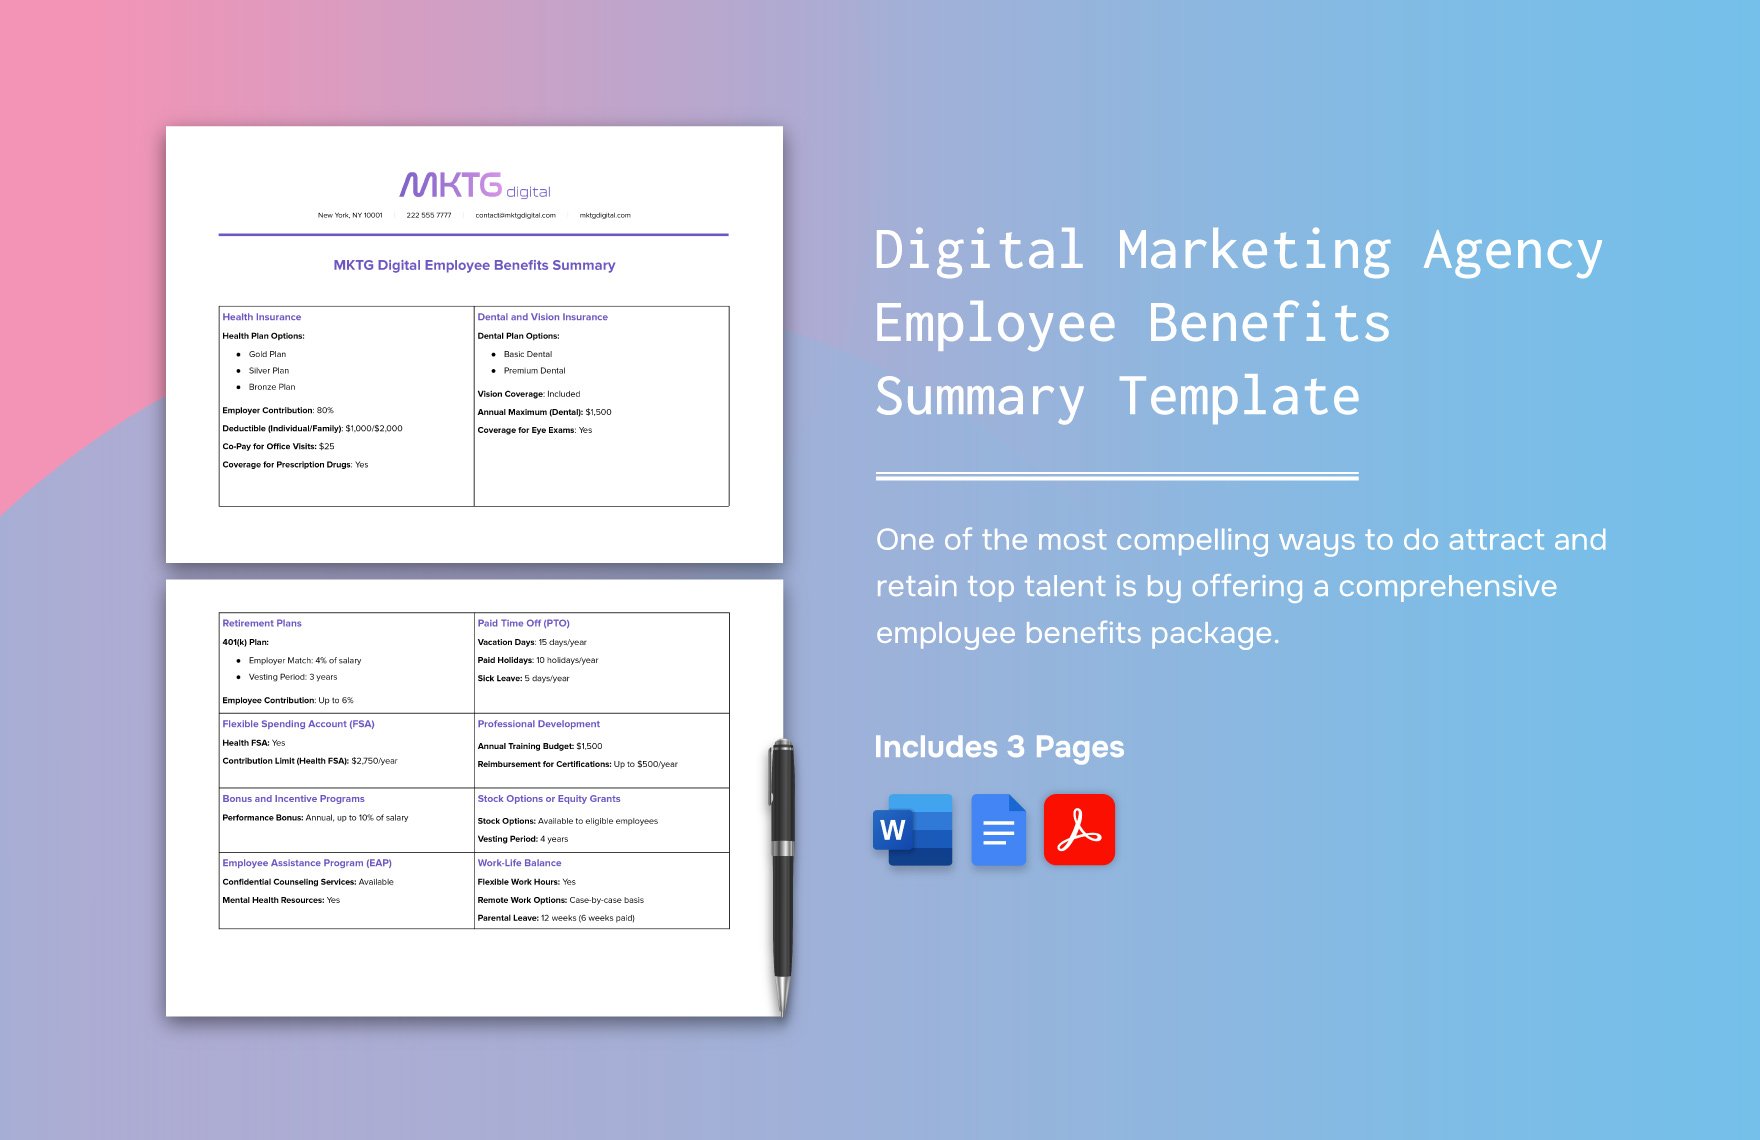 Digital Marketing Agency Employee Benefits Summary Template